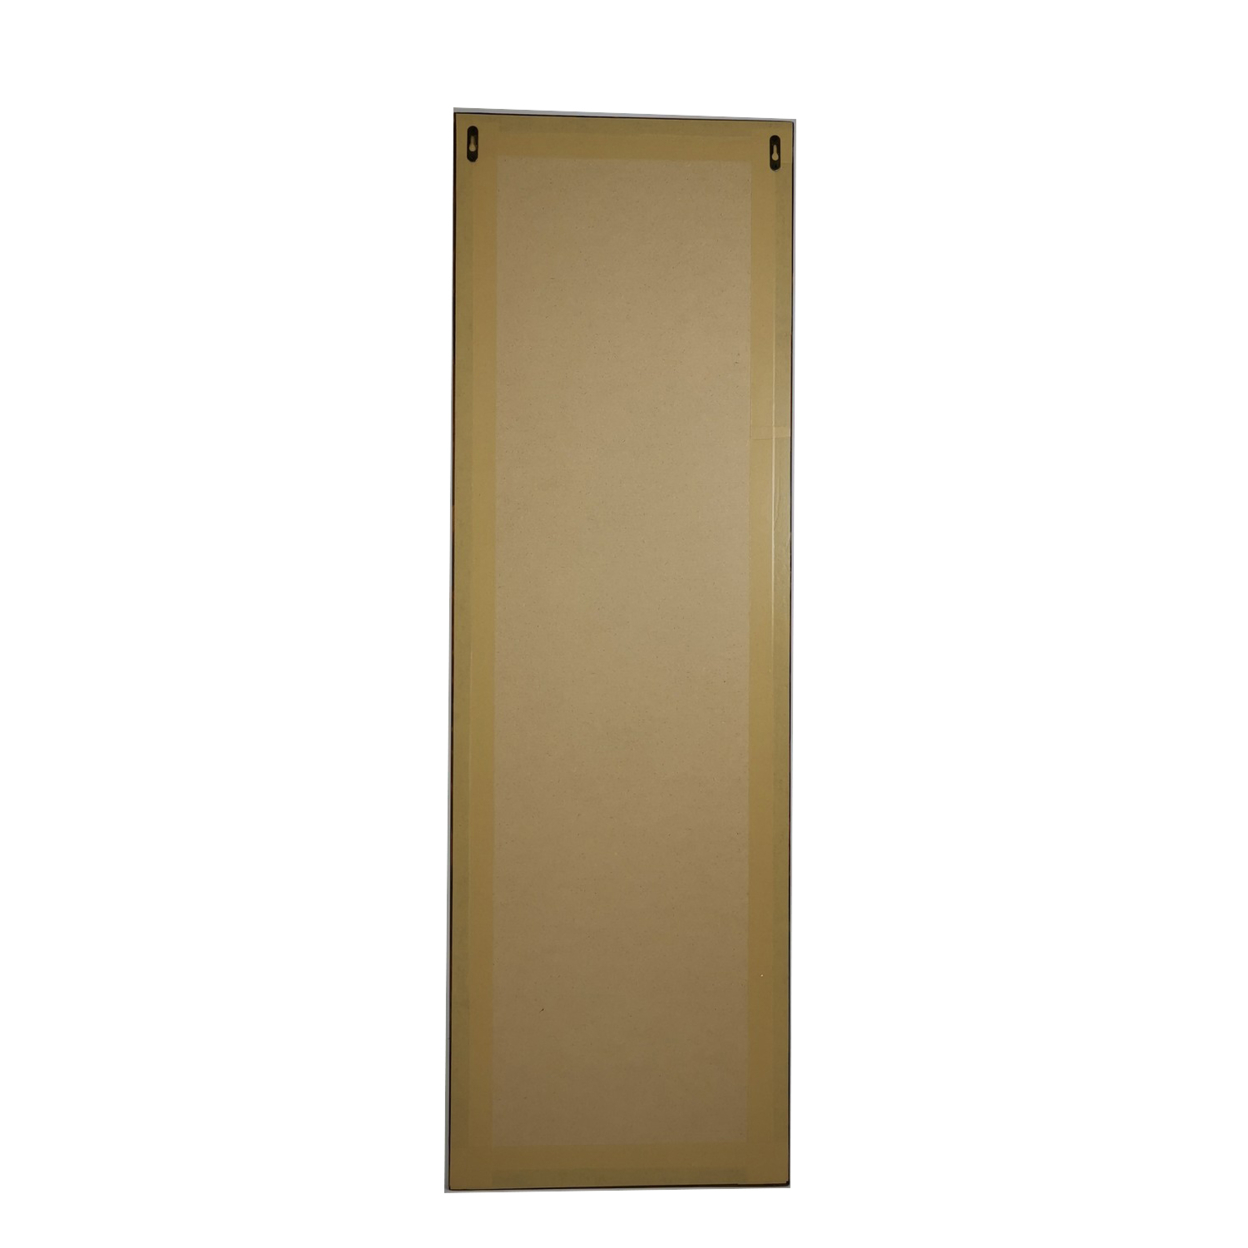 Wooden Frame Mirror With Open Lattice Pattern Front, Brown- Saltoro Sherpi